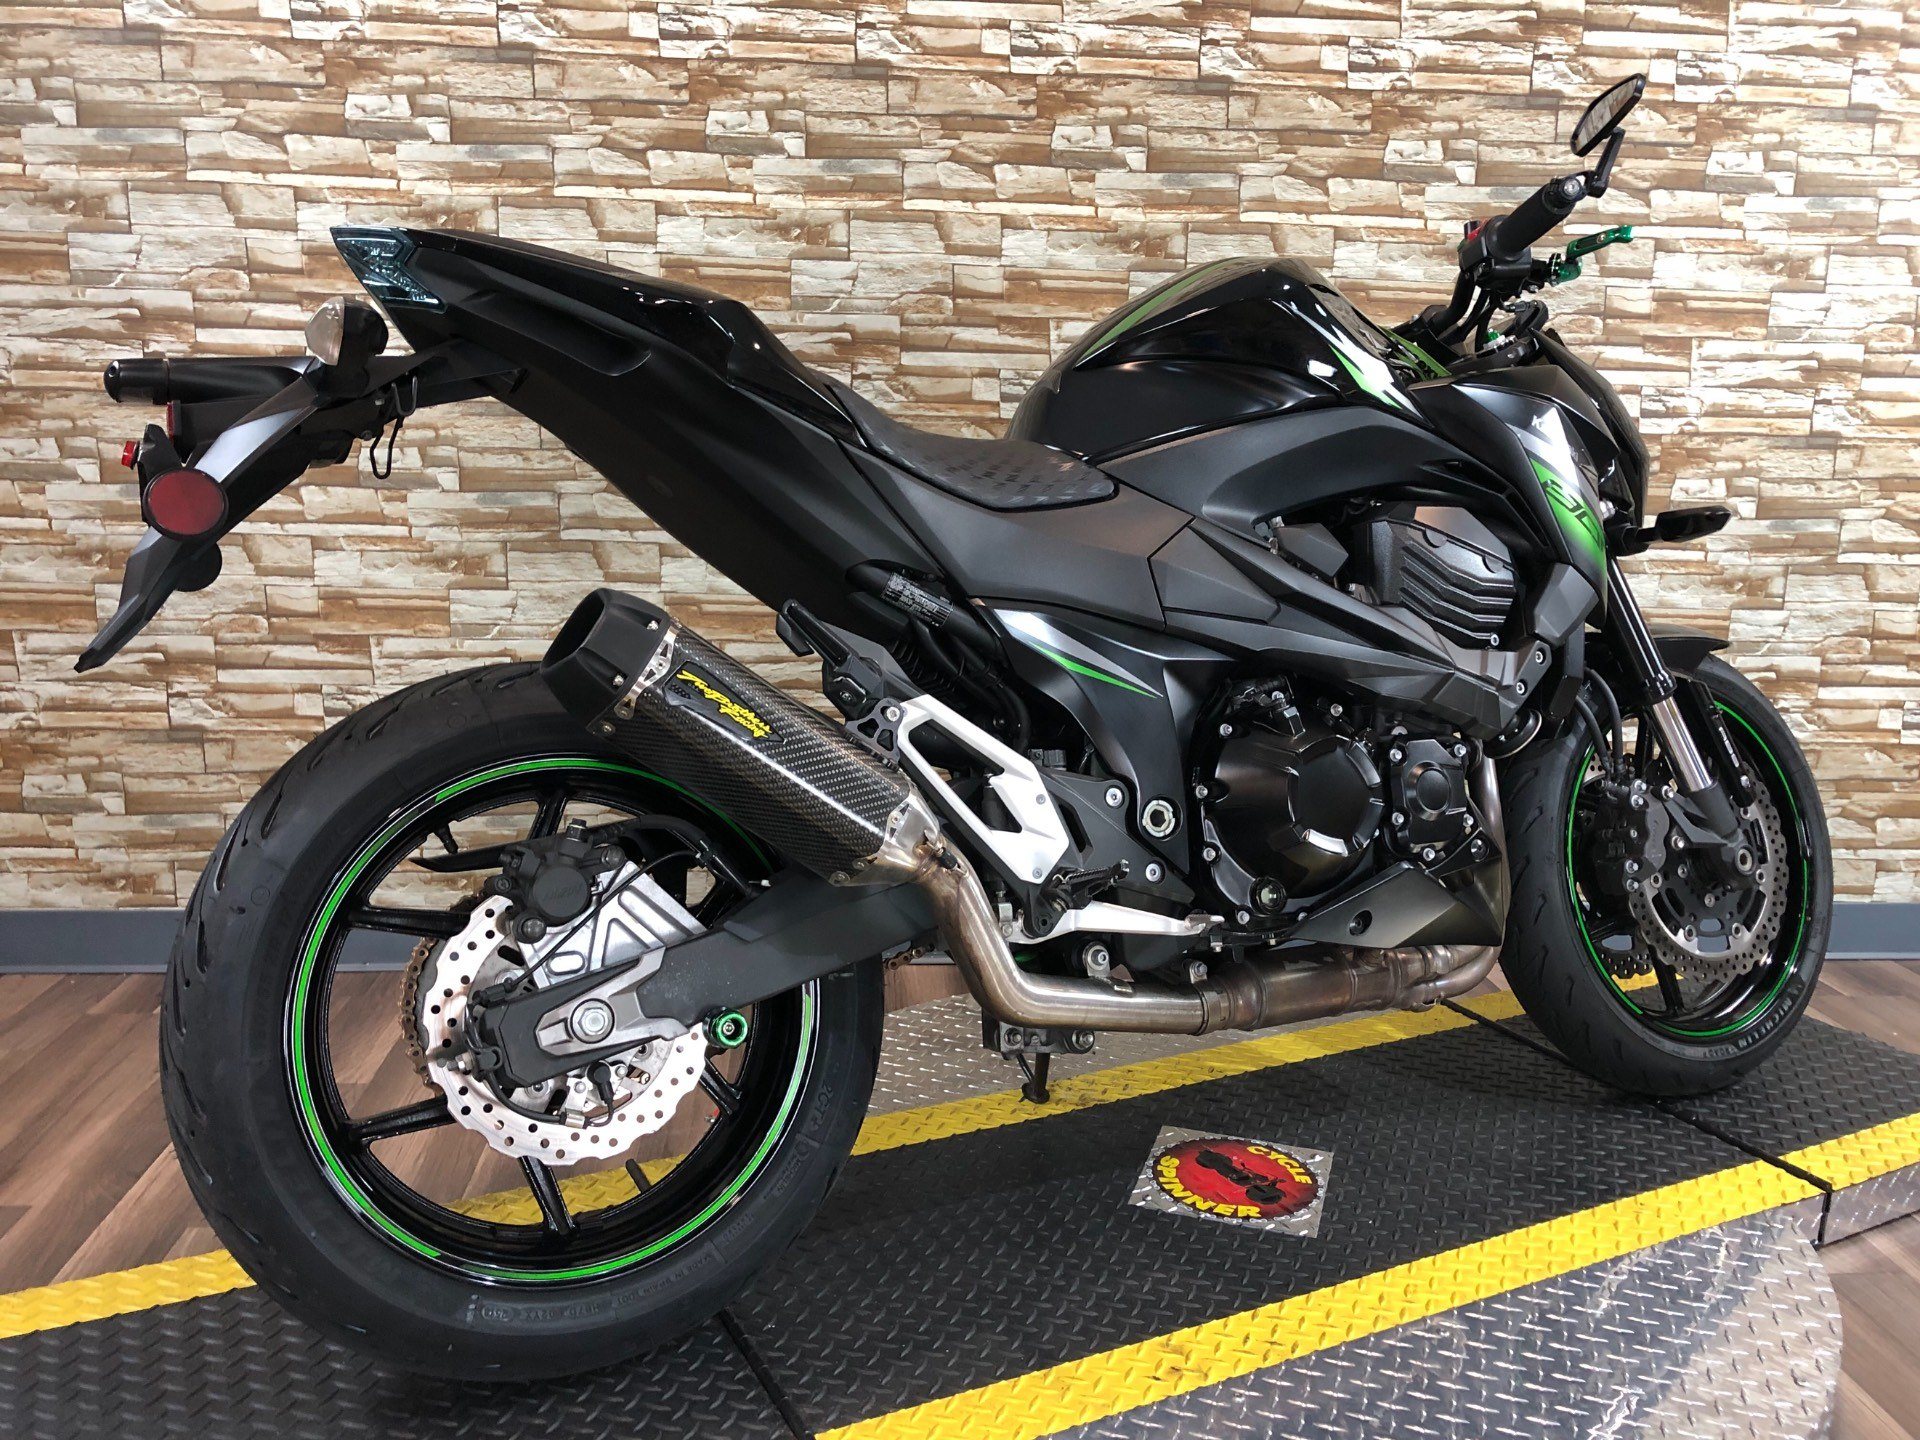 Used 2016 Kawasaki Z800 ABS Motorcycles in Port Charlotte, FL | Stock ...